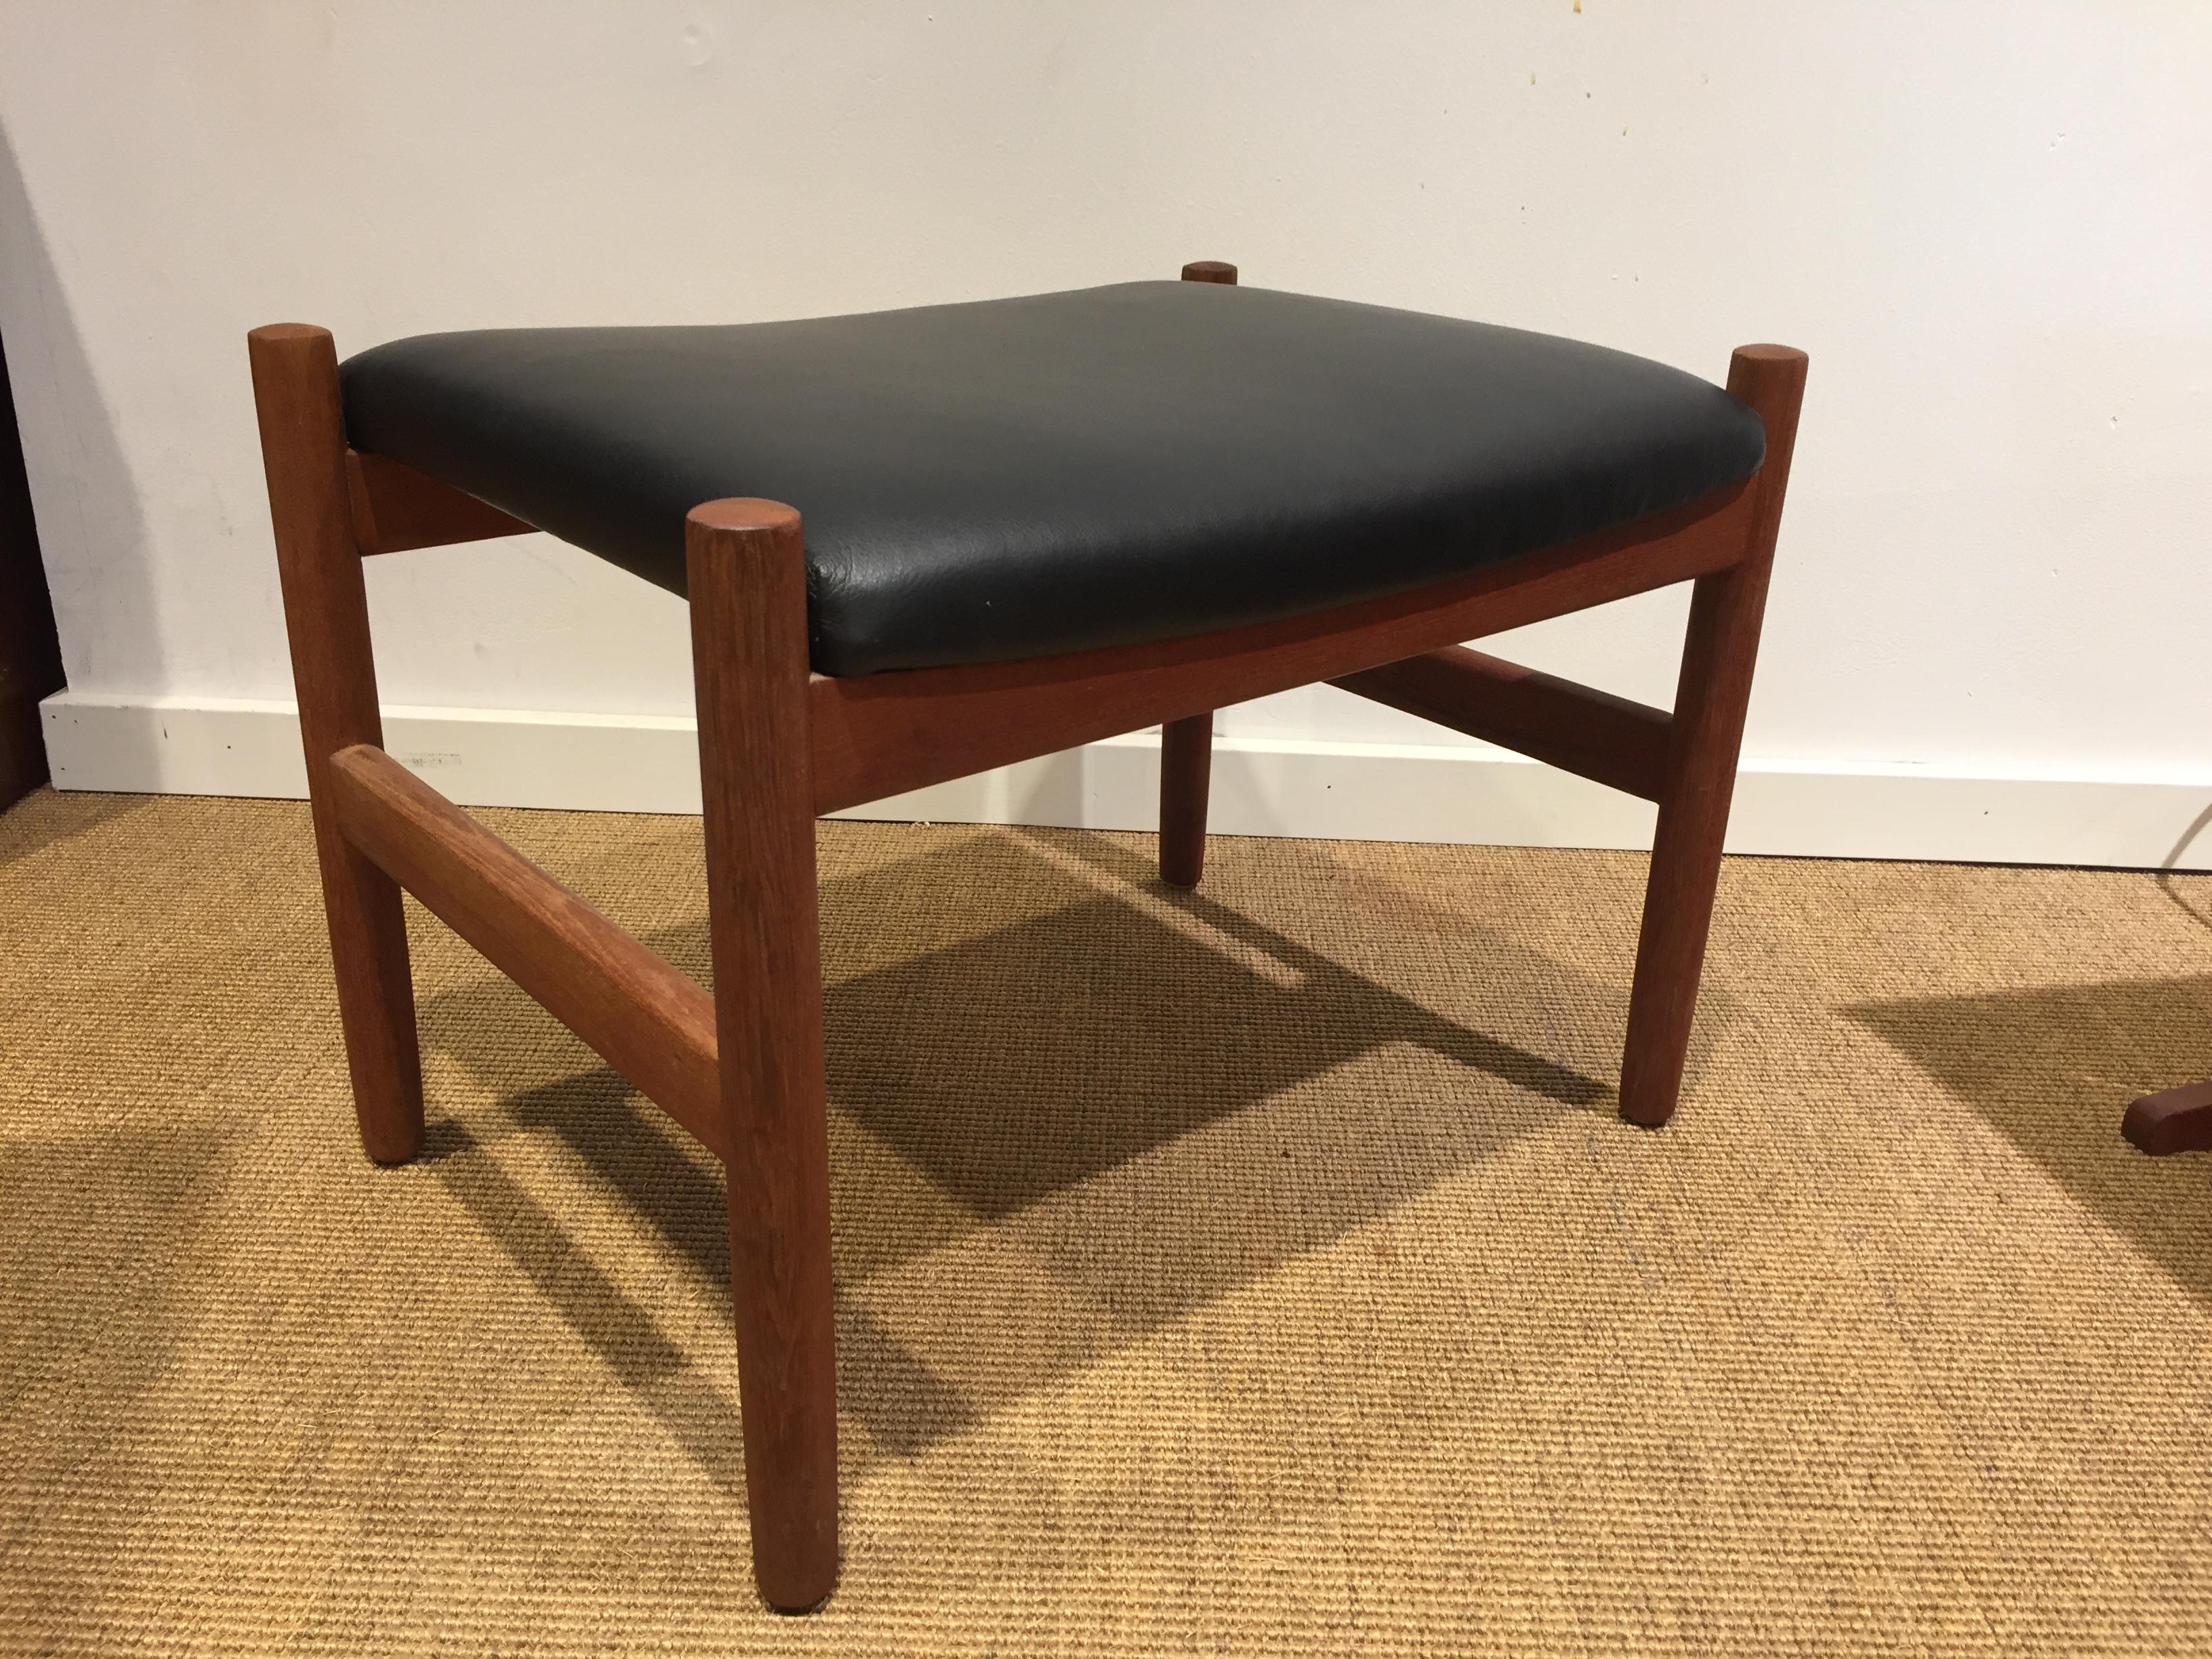 Stool in teak upholstered in black leather.
The stool appears cleaned, sanded and oiled.
Produced at Spøttrup Møbelfabrik.
Design: Hugo Frandsen.
Dimensions: H 38, L 53, B 39.